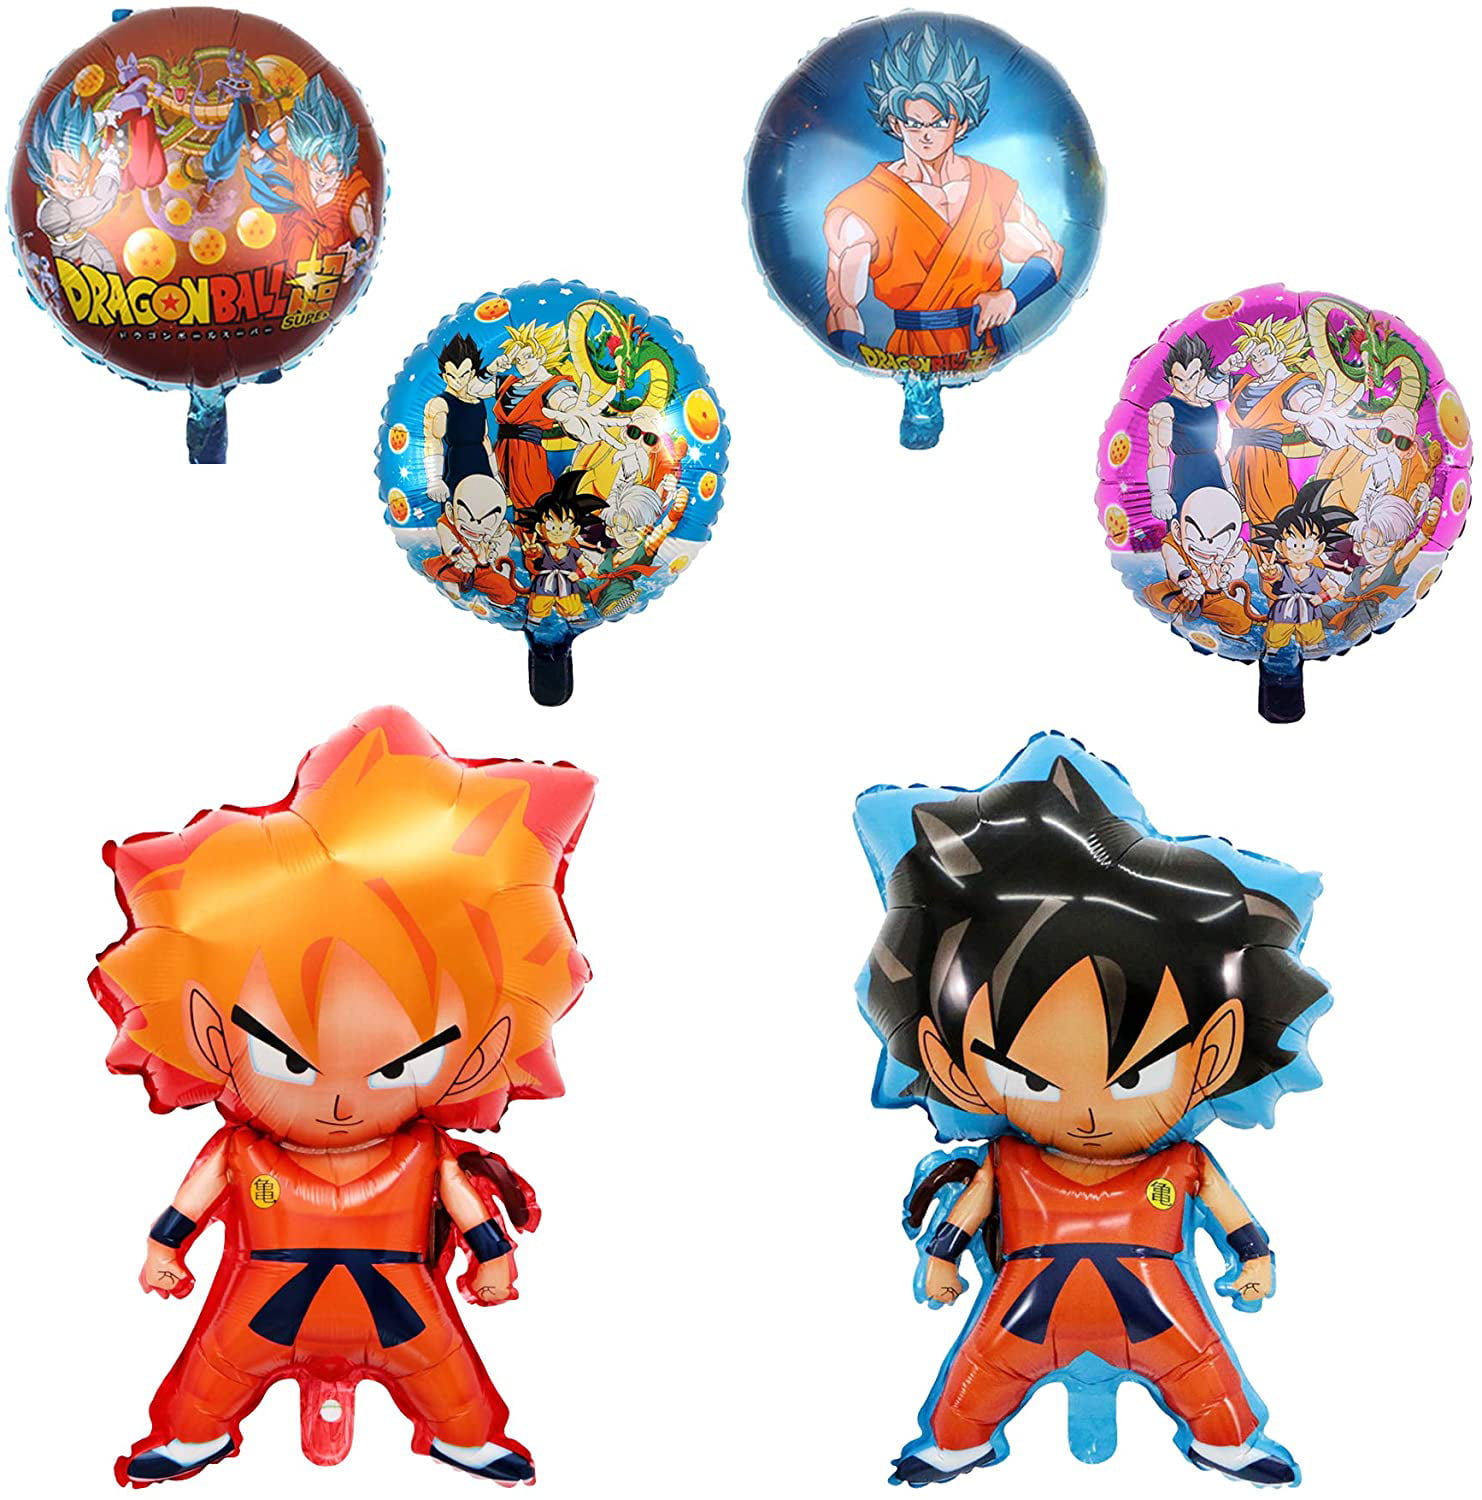 6 Pcs Dragon Ball Z Balloons Birthday Celebration Foil Balloon Set Dbz Super Saiyan Goku Gohan Character Party Decorations Walmart Com Walmart Com